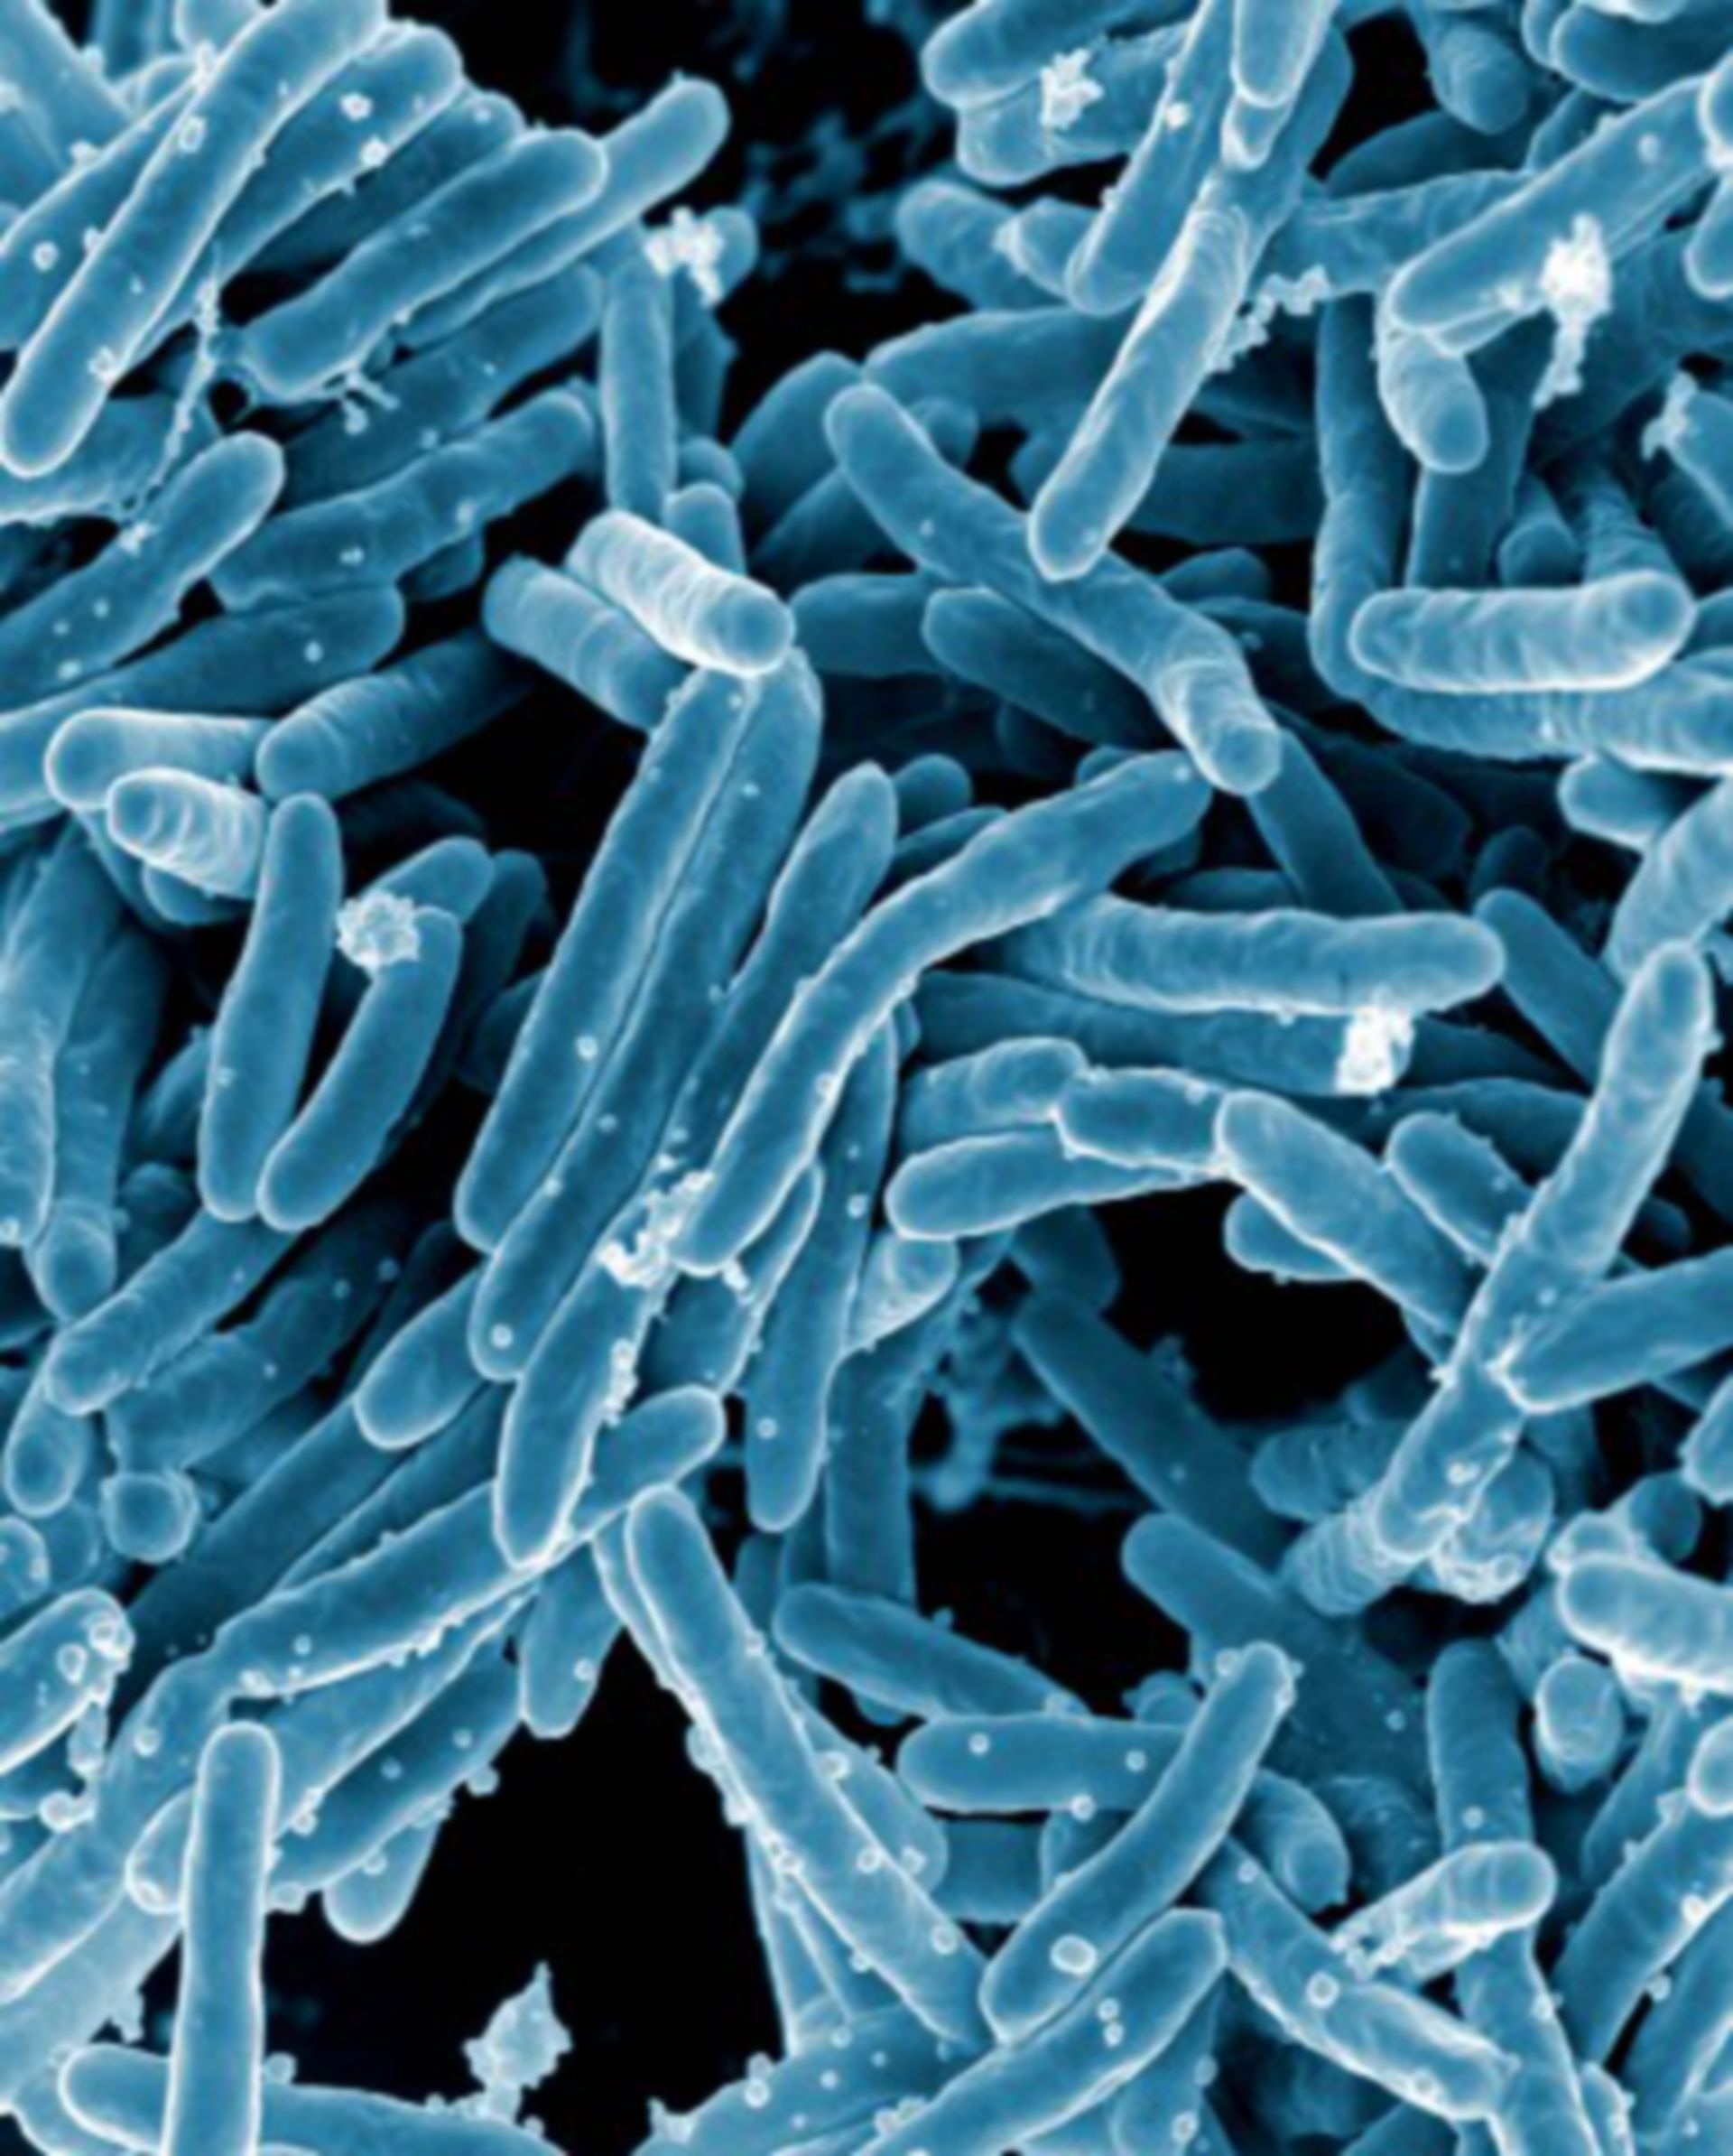 Mycobacterium tuberculosis Bakterien (REM)